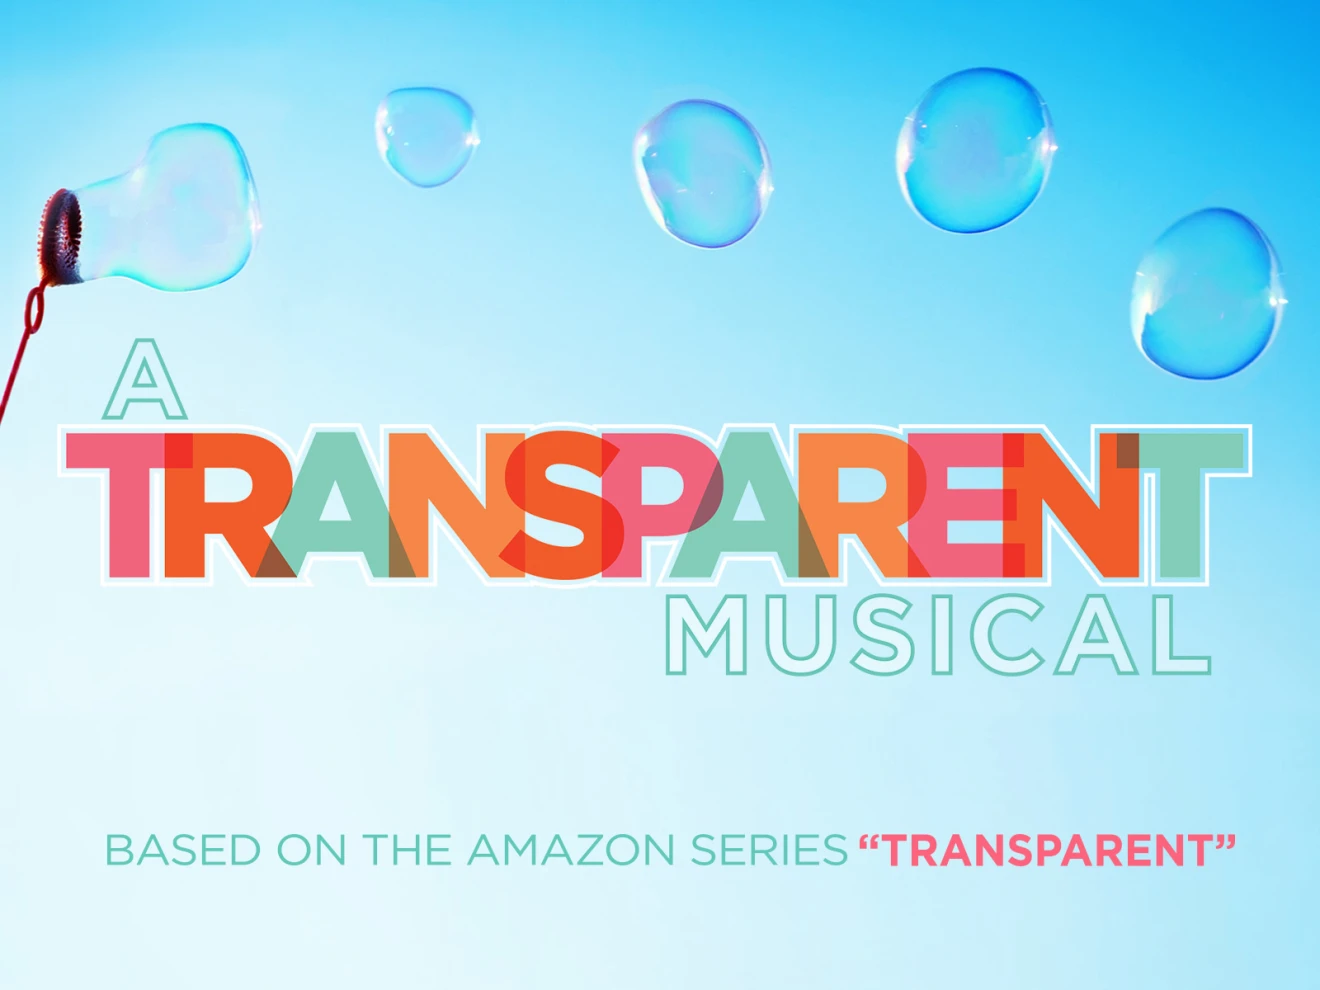 A Transparent Musical